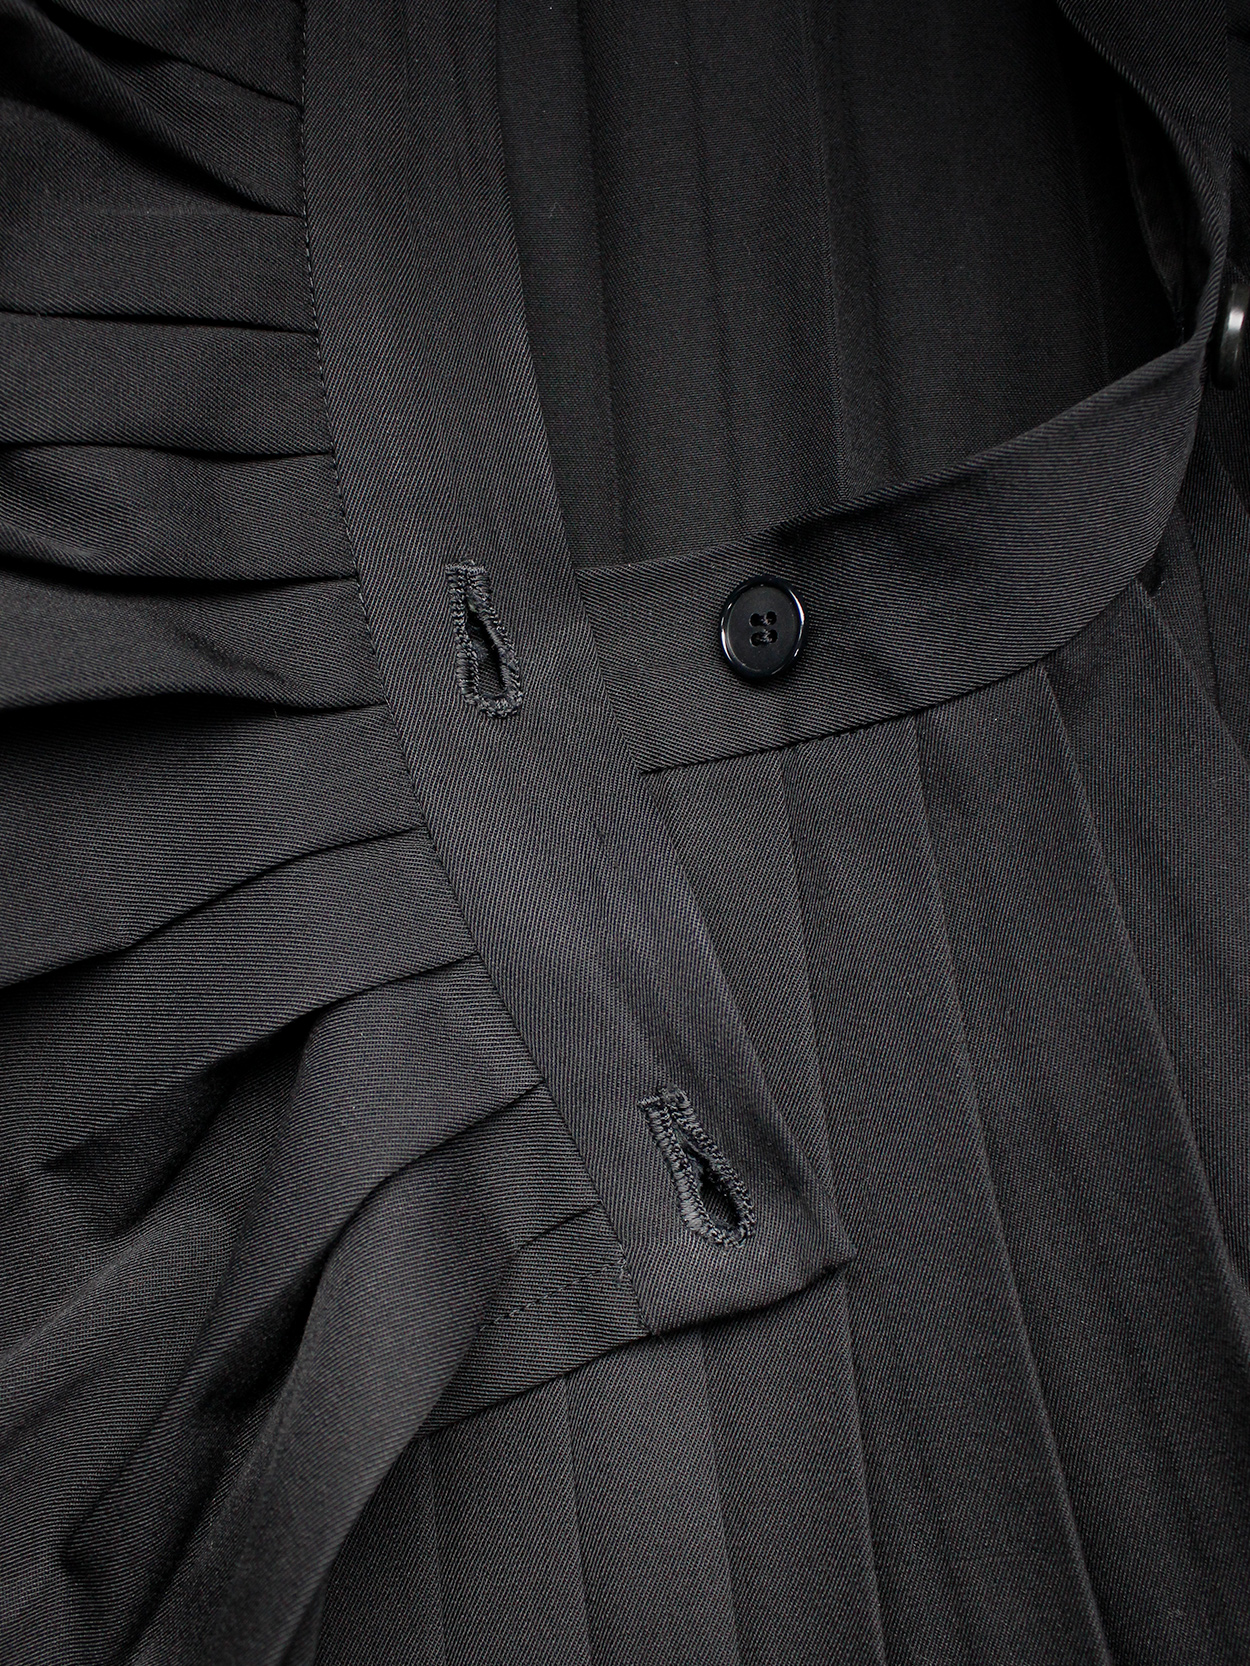 Y's Yohji Yamamoto black maxi skirt with sharp accordeon pleats - V A N ...